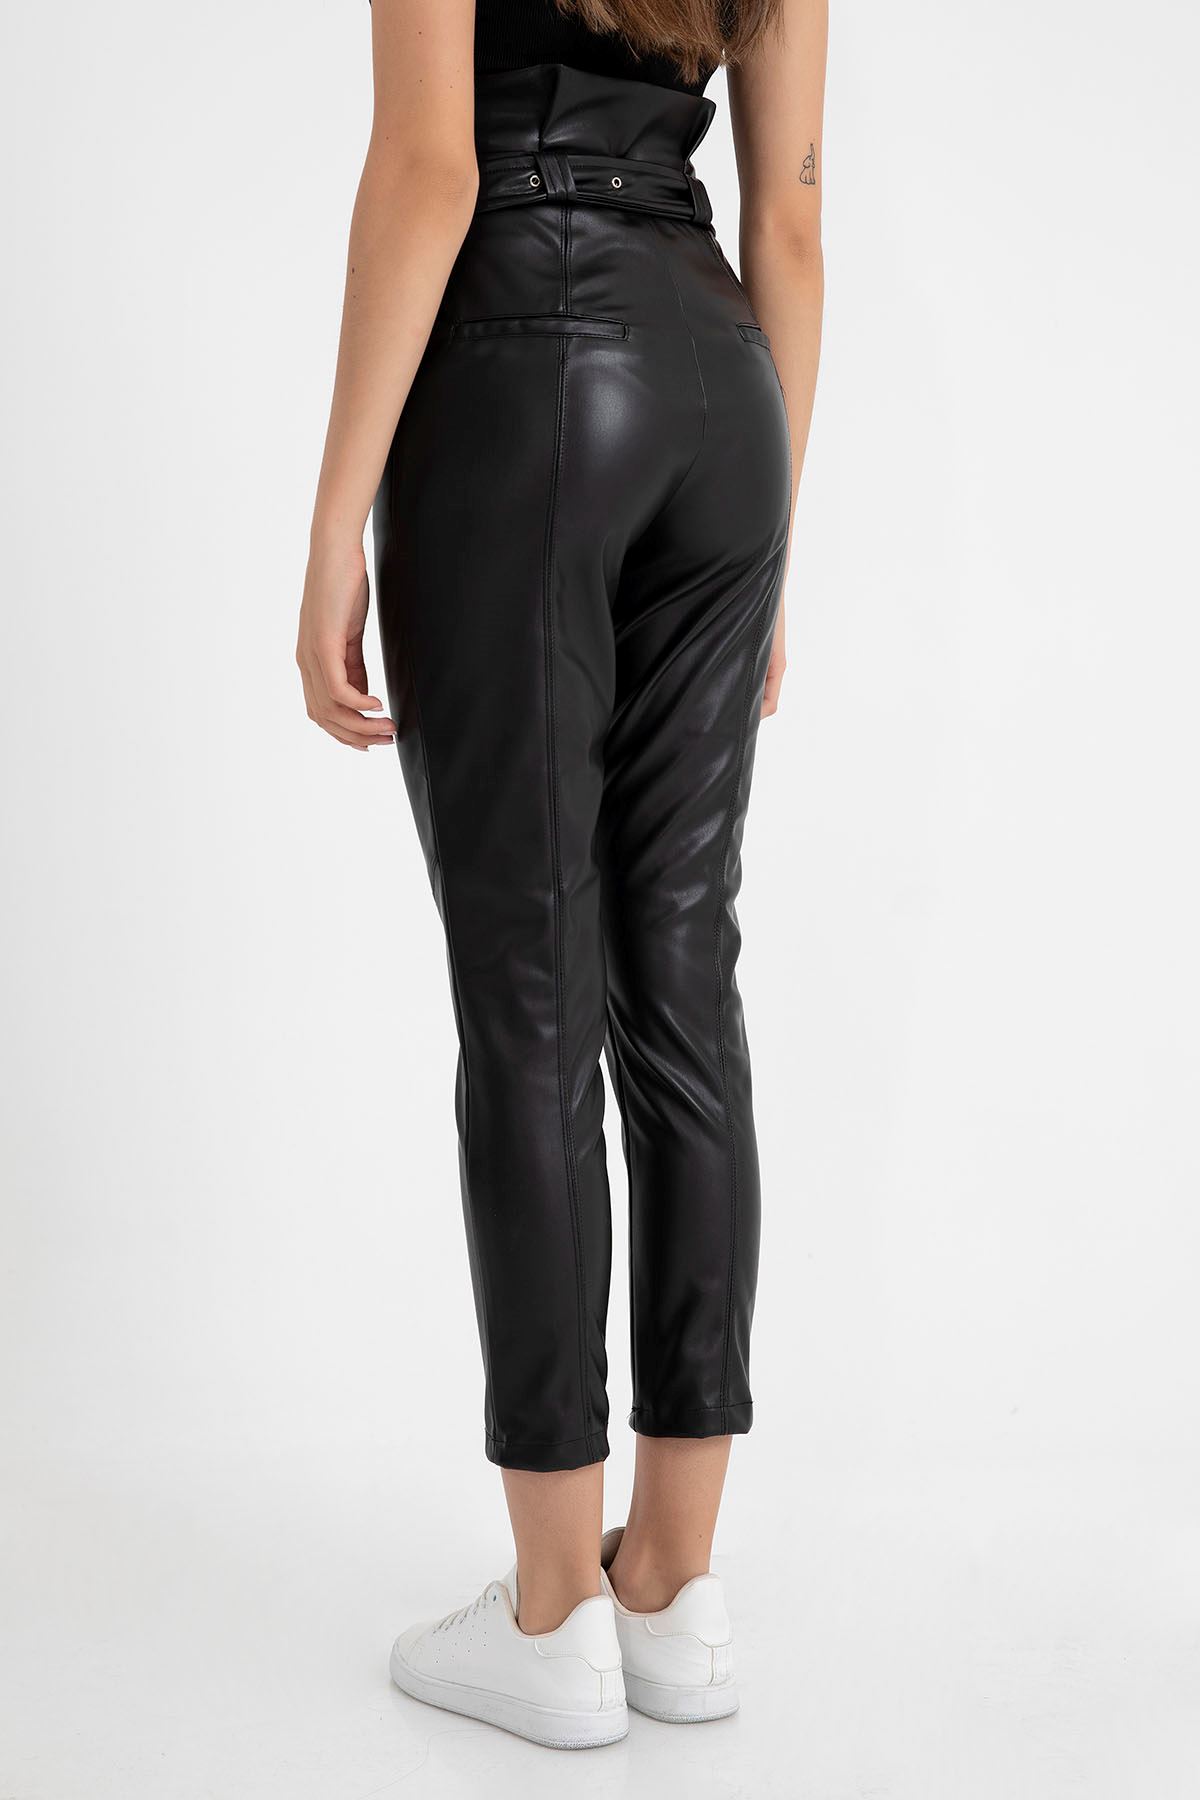 Zara Leather Fabric Ankle Length Tight Fit High Waist Belt Women'S Trouser - Black